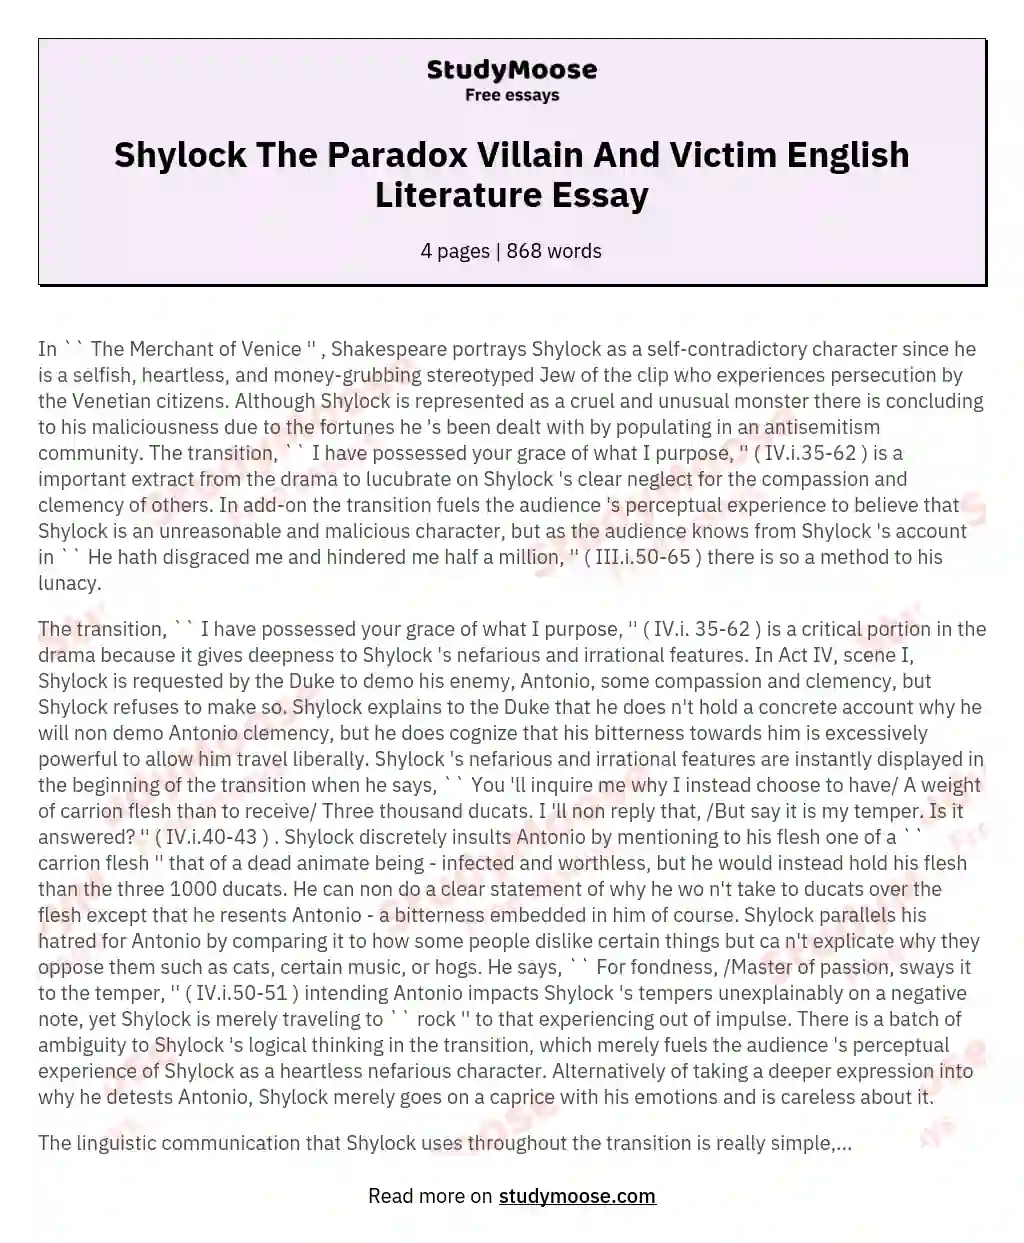 Shylock The Paradox Villain And Victim English Literature Essay